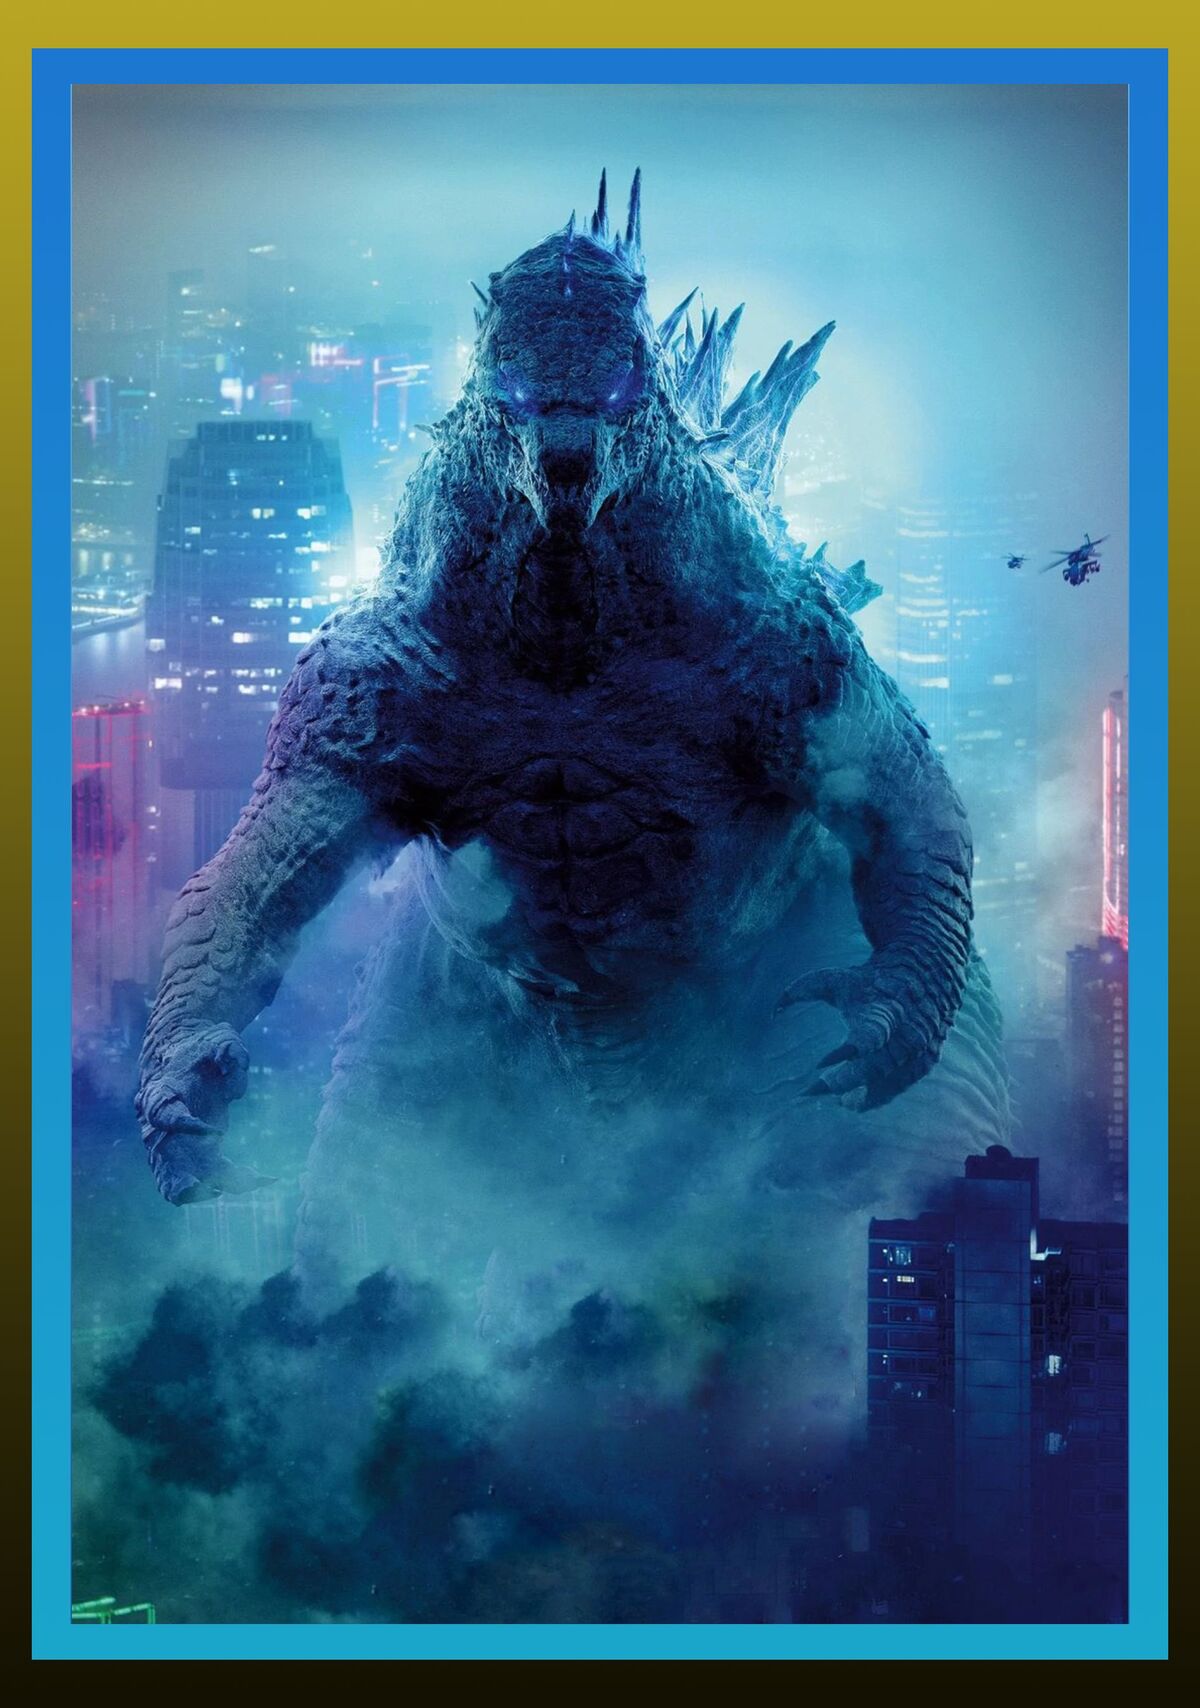 Custom Mokele Mbembe From Godzilla King Of The Monsters 2019 